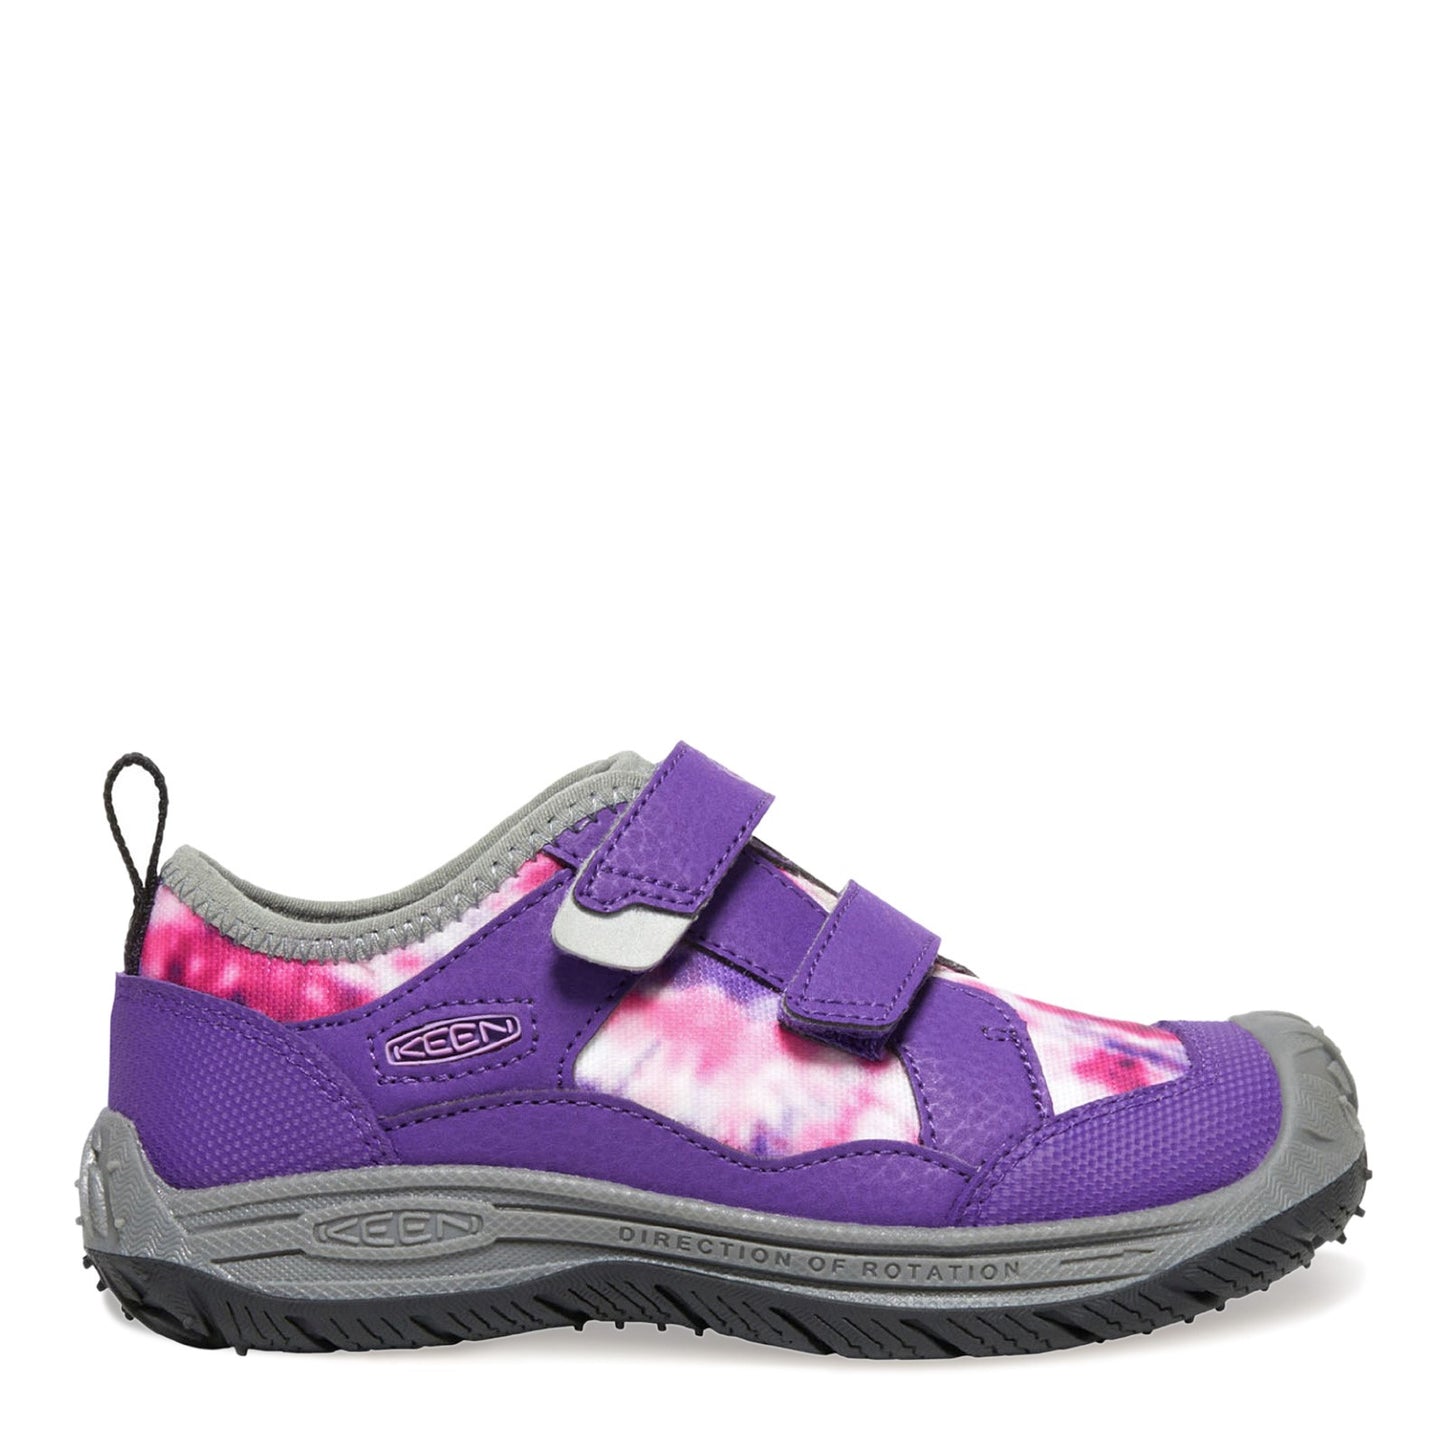 Peltz Shoes  Girl's Keen Speed Hound Sandal - Toddler & Little Kid Tilandsia Purple/Multi 1026214